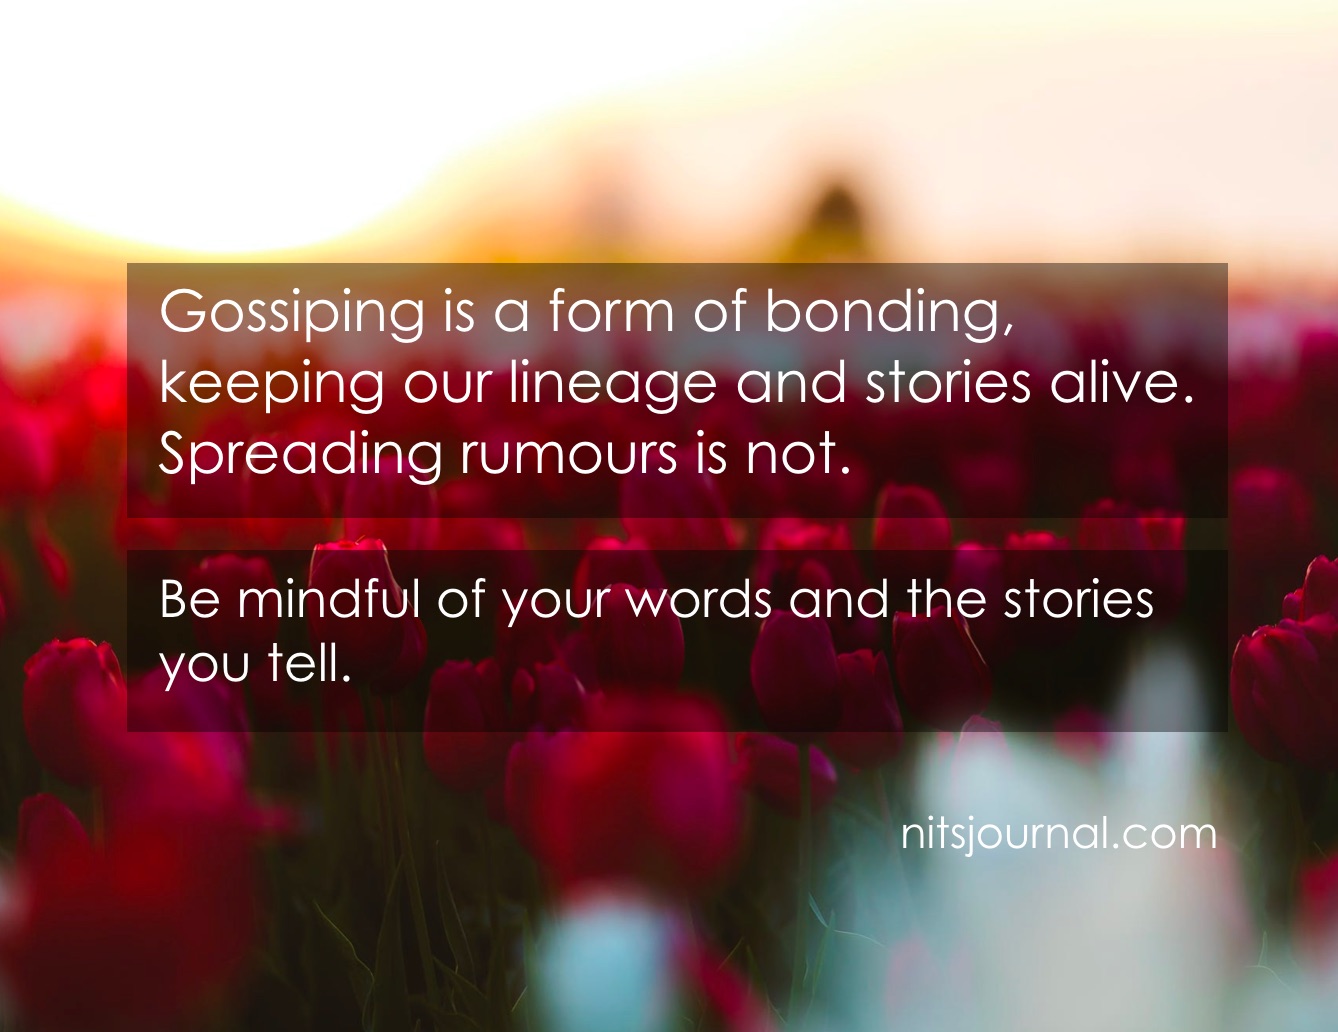 Gossiping vs Rumors - The Stories You Tell